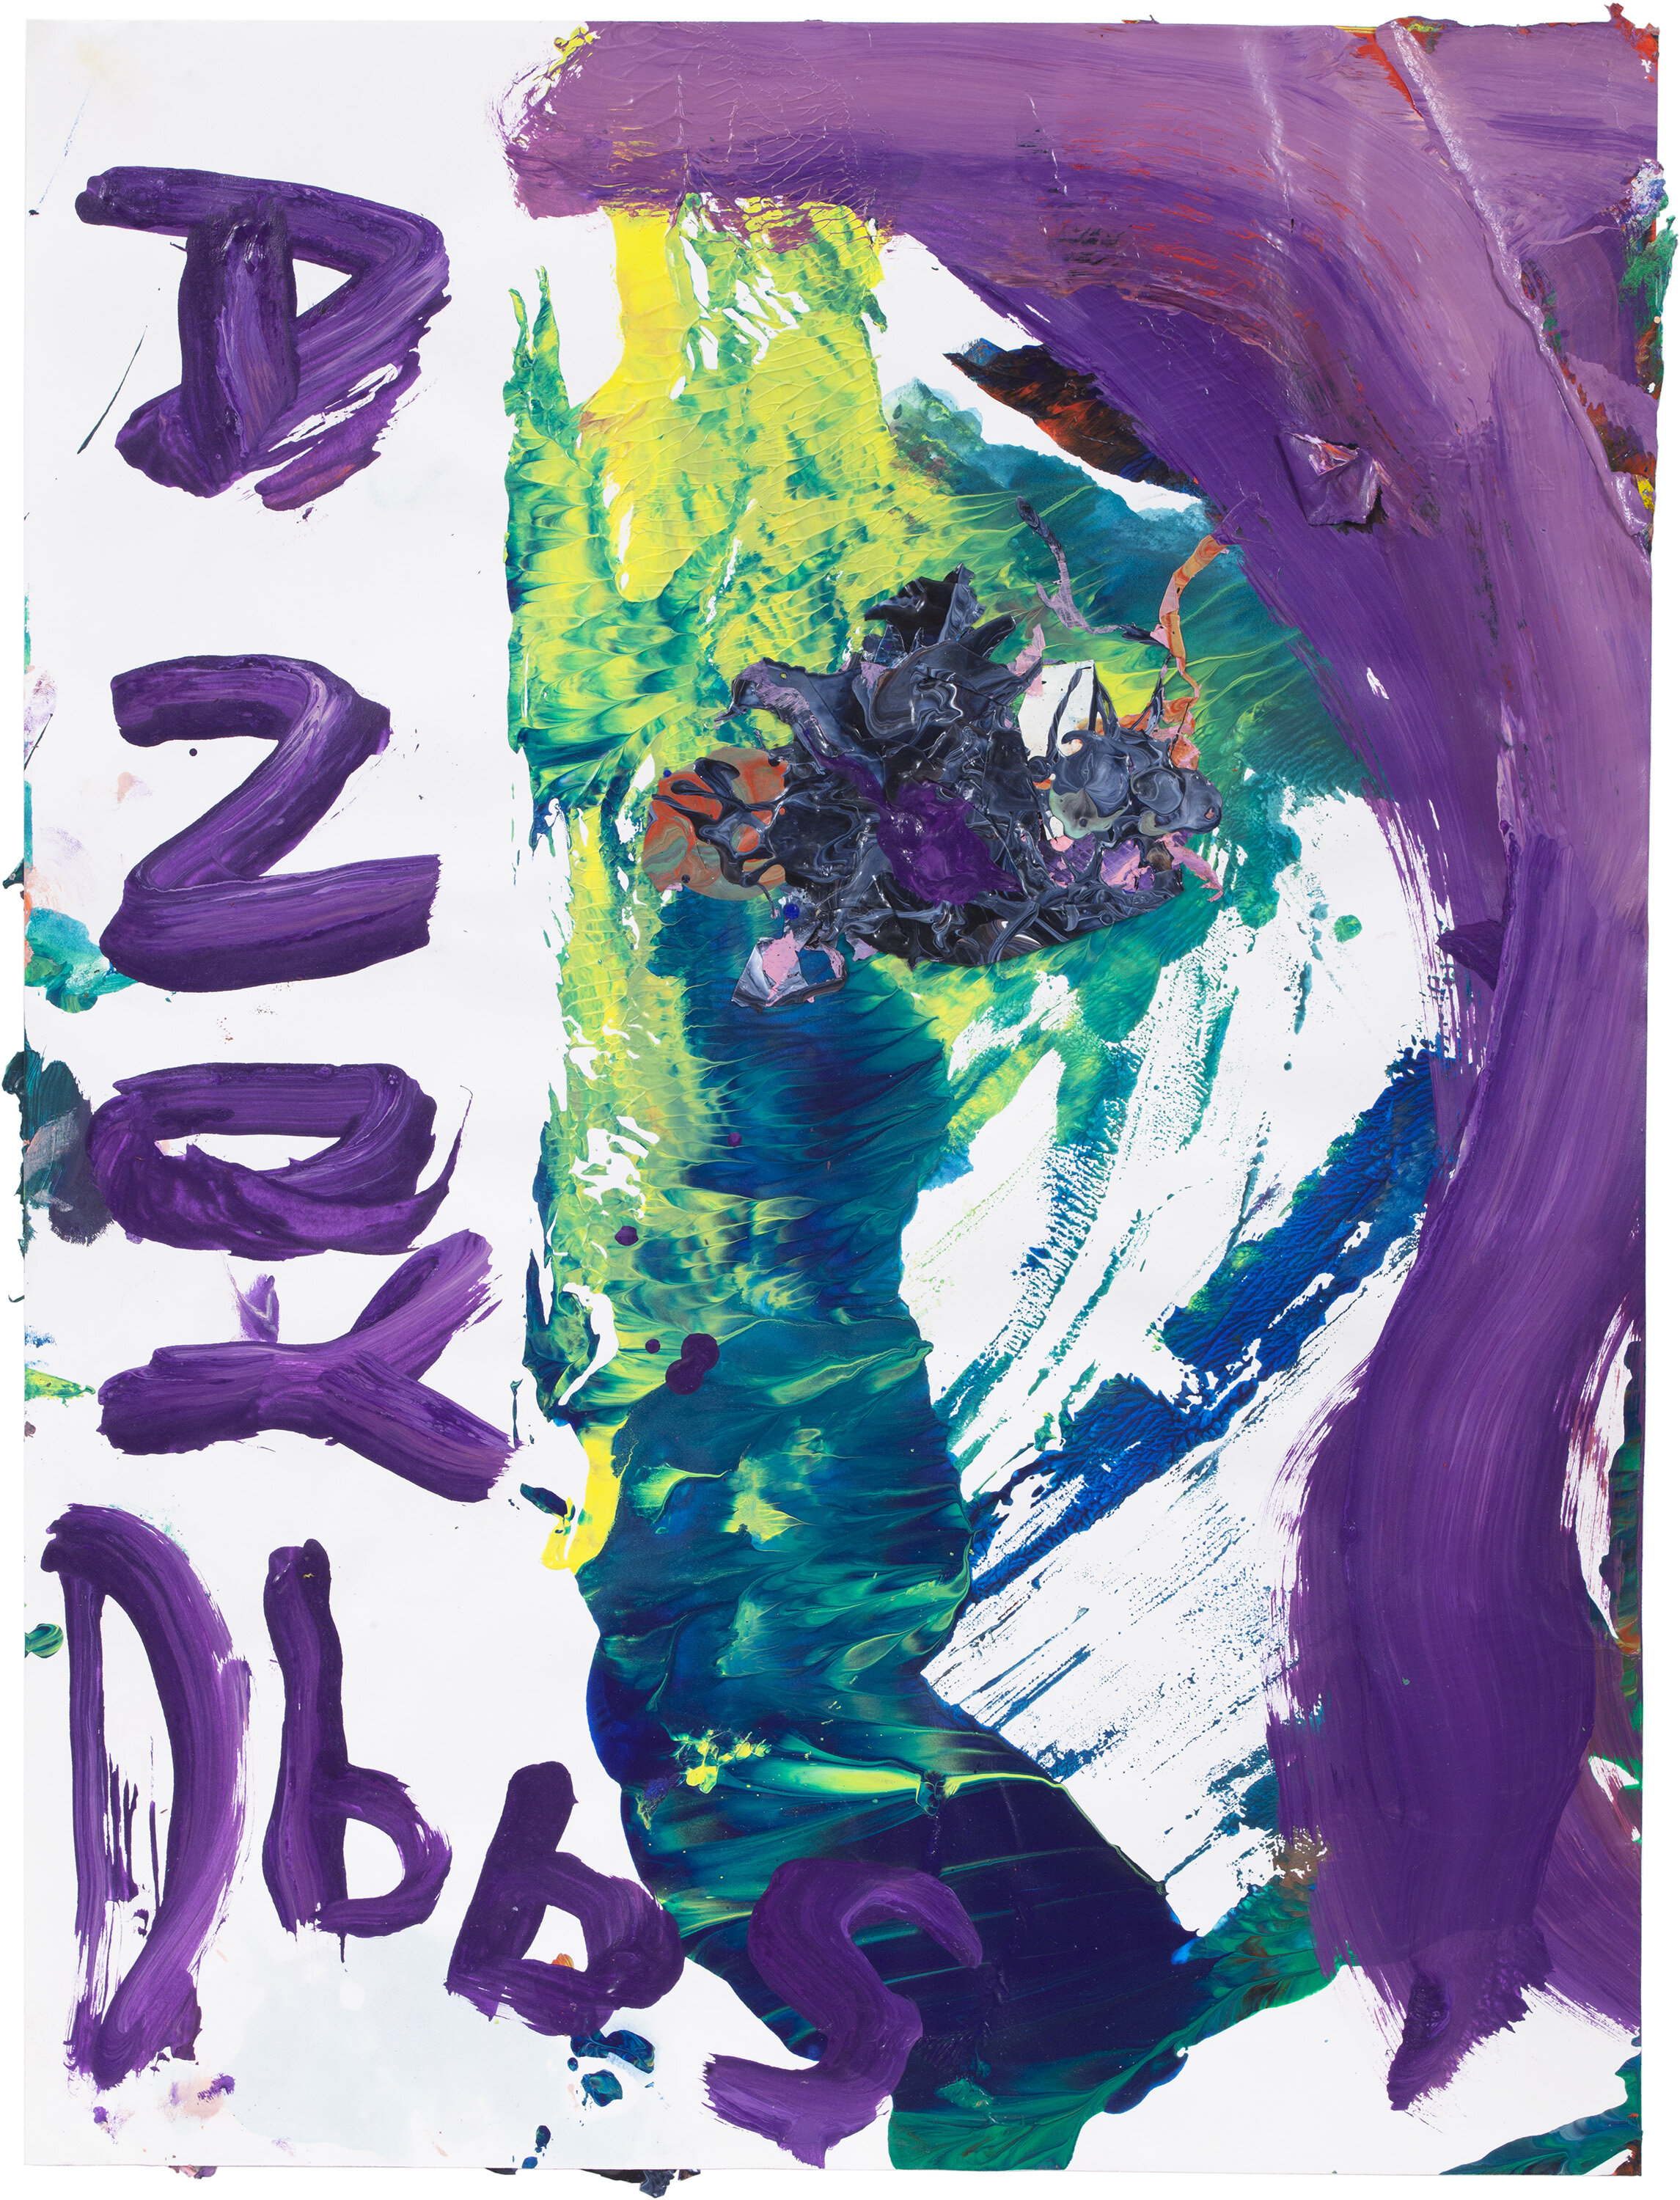  Drew Beattie and Ben Shepard   DBBS-DRW-2019-127   2019  acrylic on paper 24 x 18 inches 